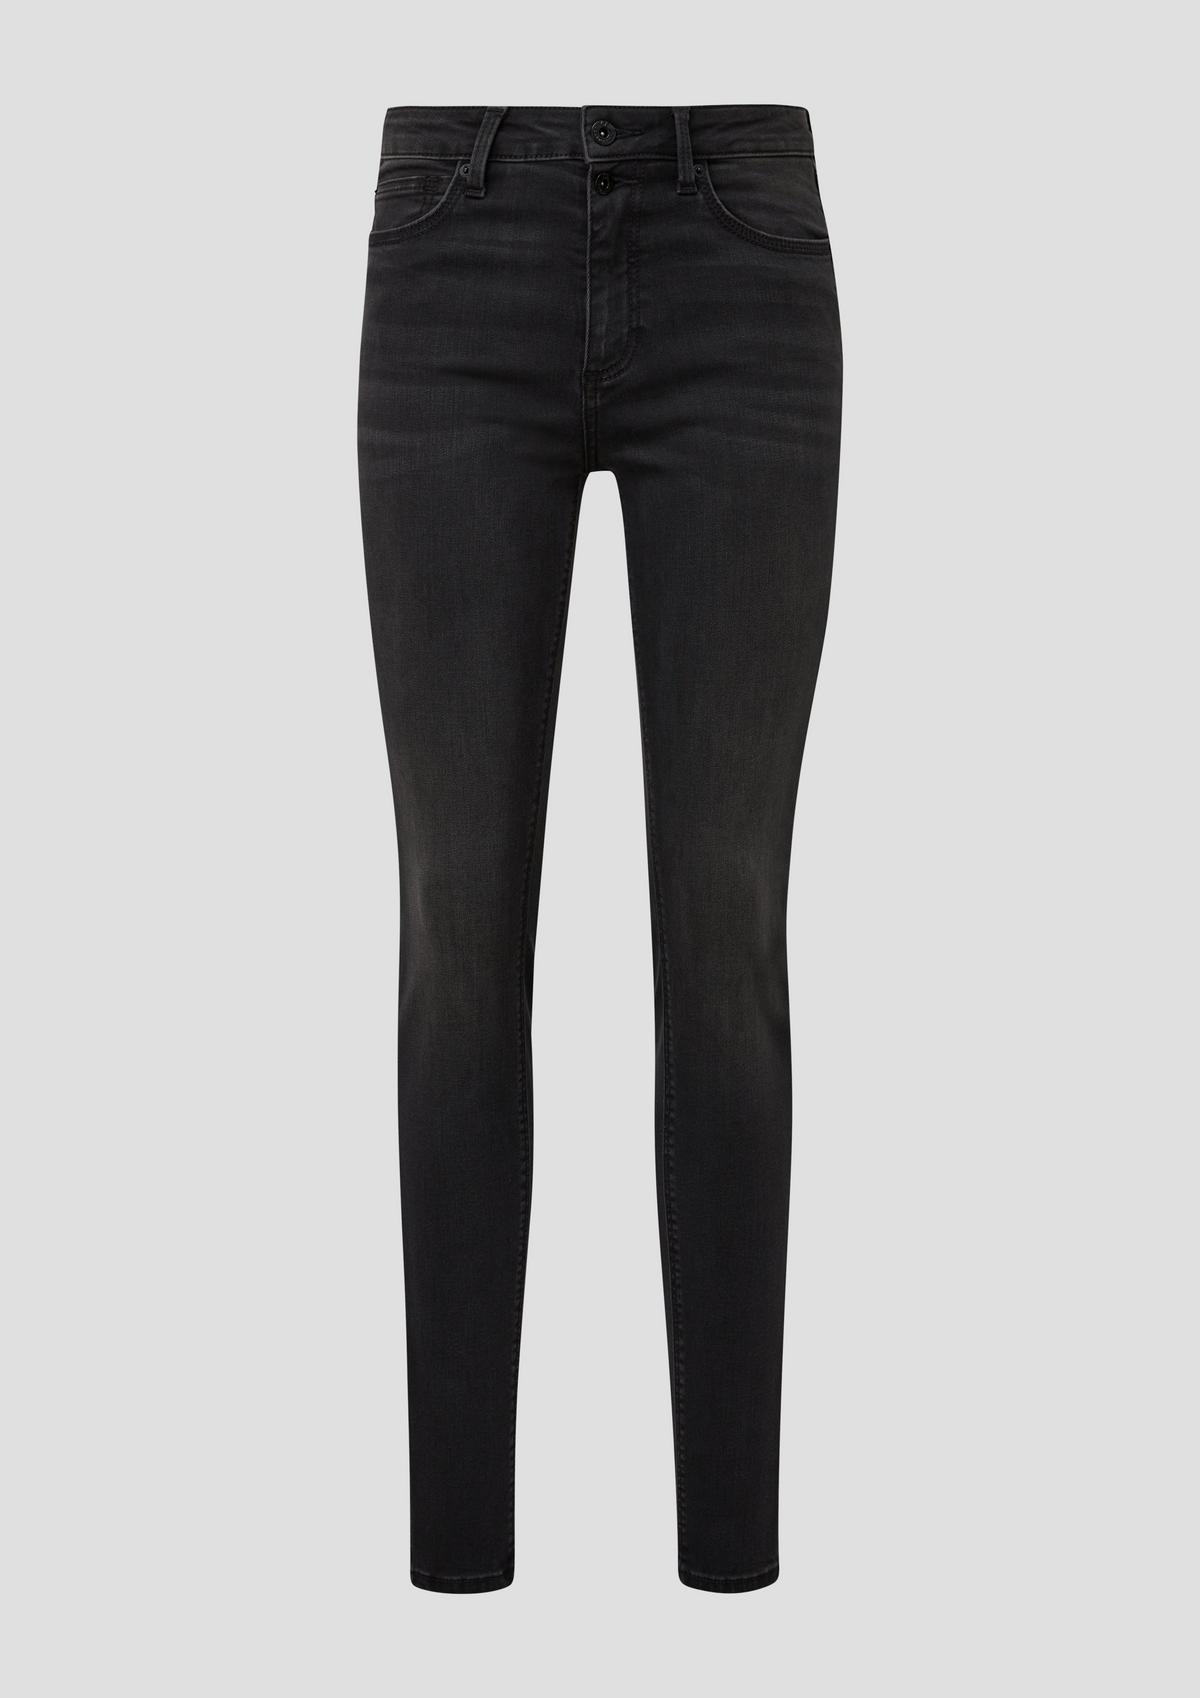 s.Oliver Jeans hlače Sadie / kroj Skinny Fit / High Rise / oprijete hlačnice/ 2 gumba